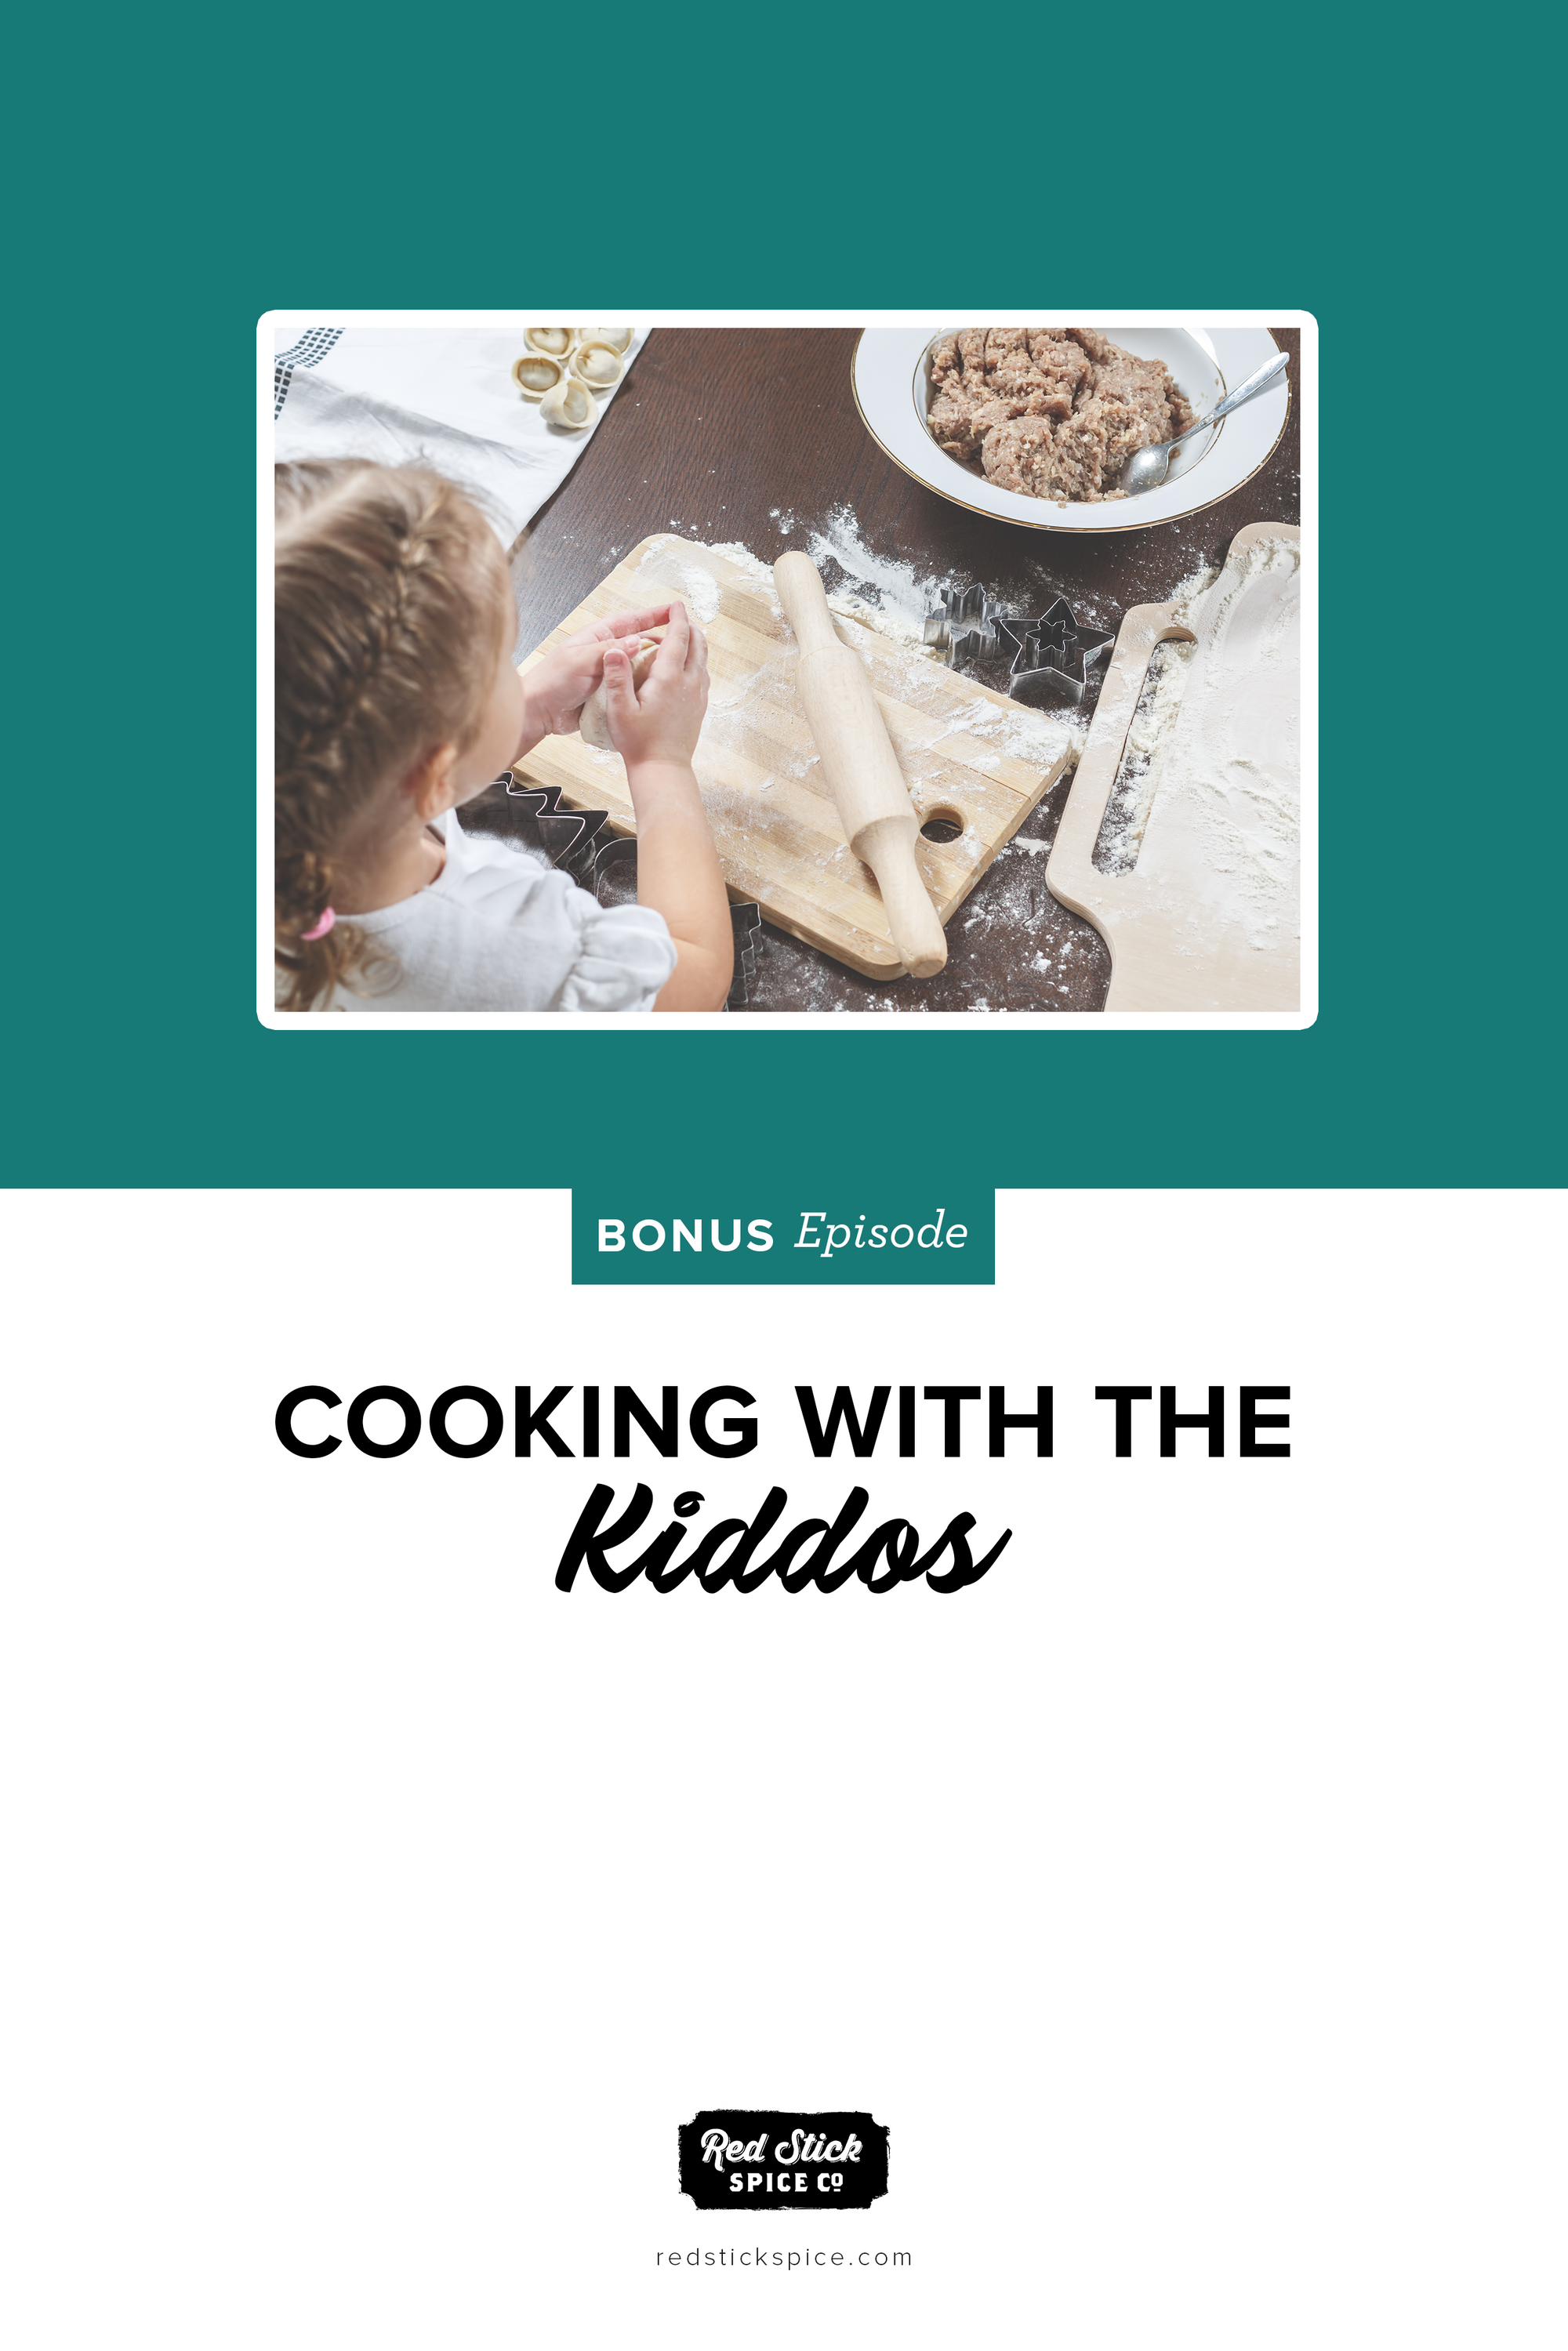 BONUS EPISODE – COOKING WITH THE KIDDOS